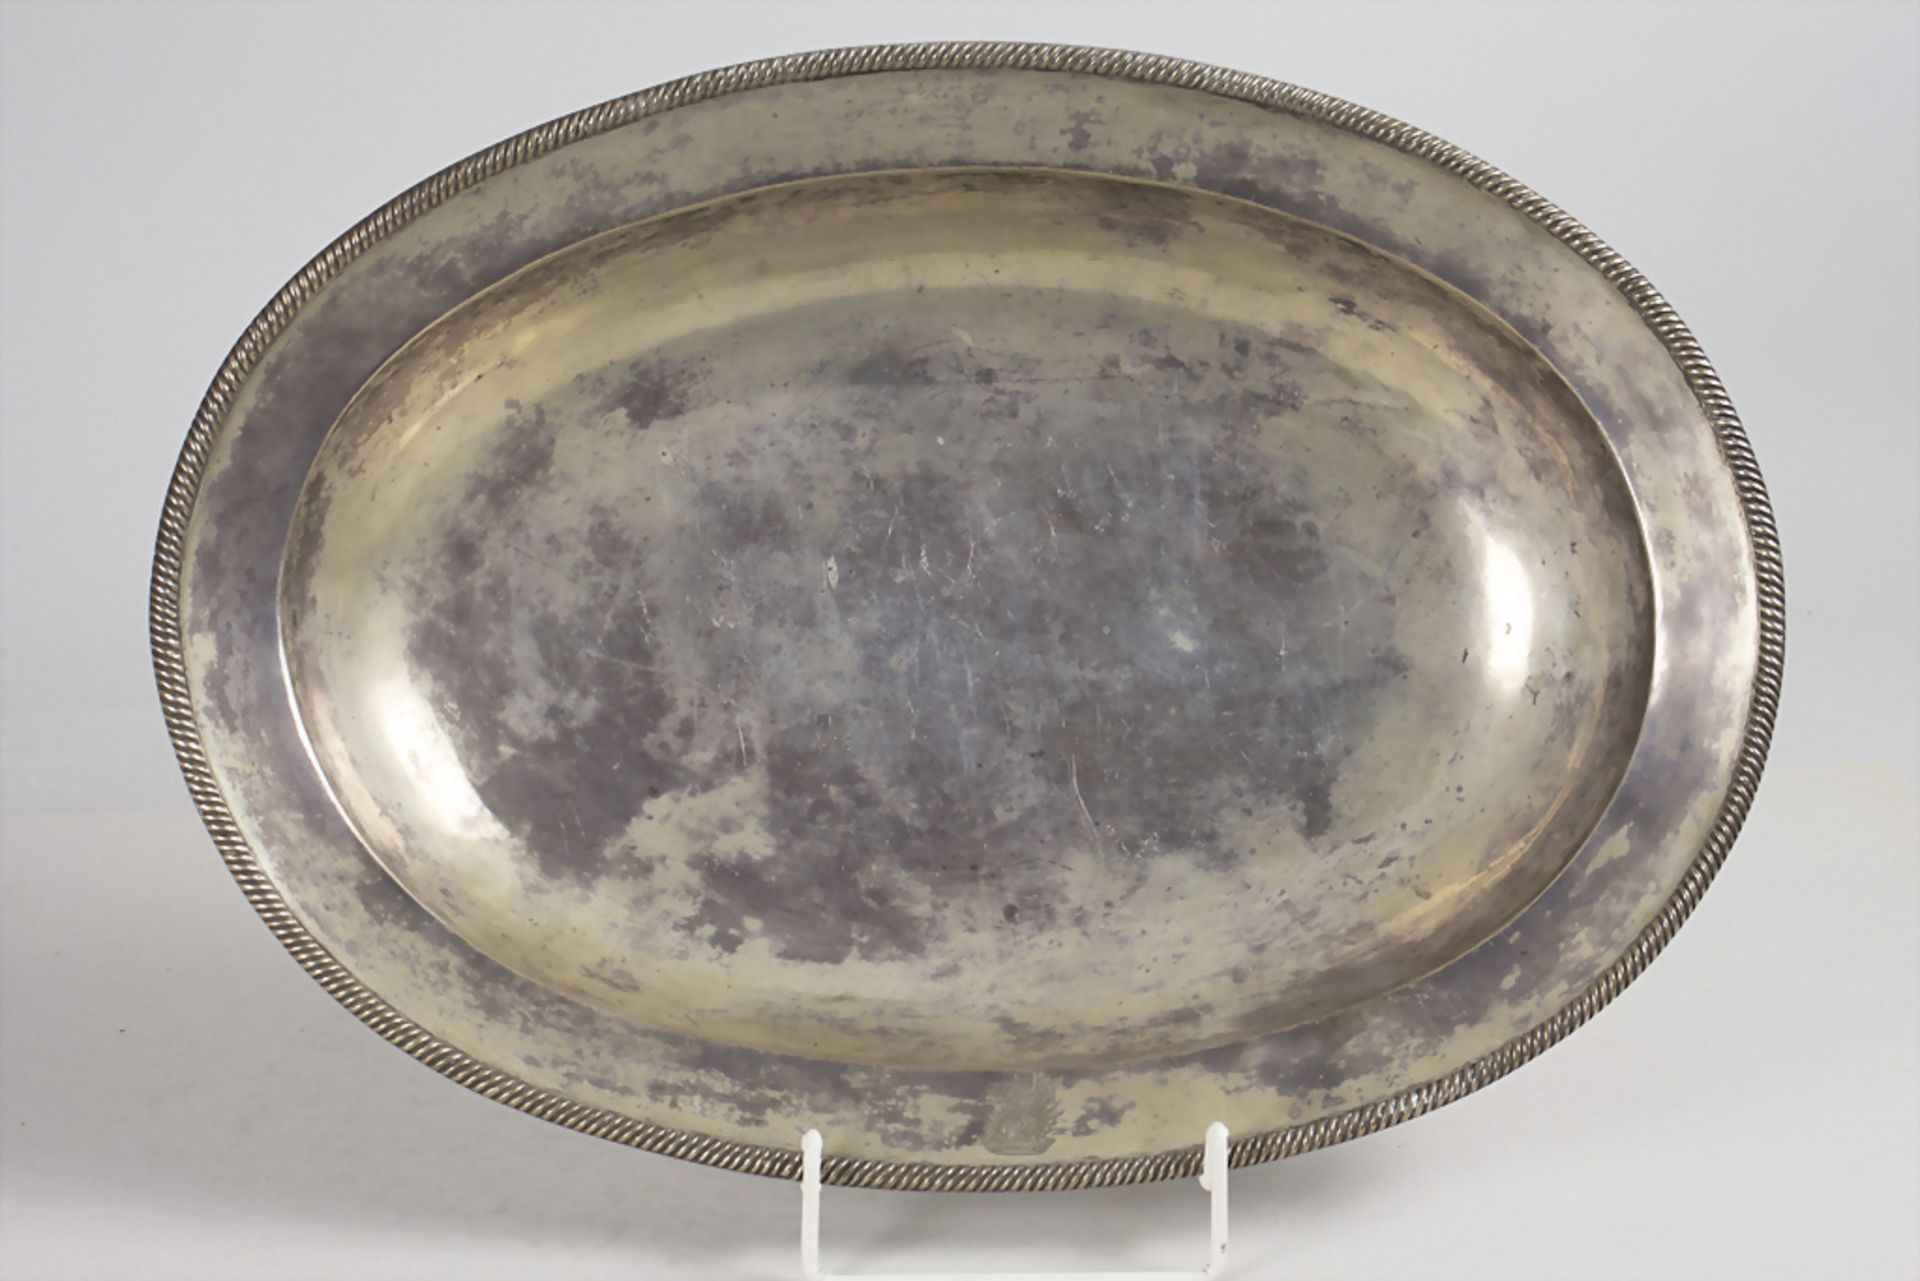 Ovale Silberschale / A large silver bowl, 18./19. Jh.